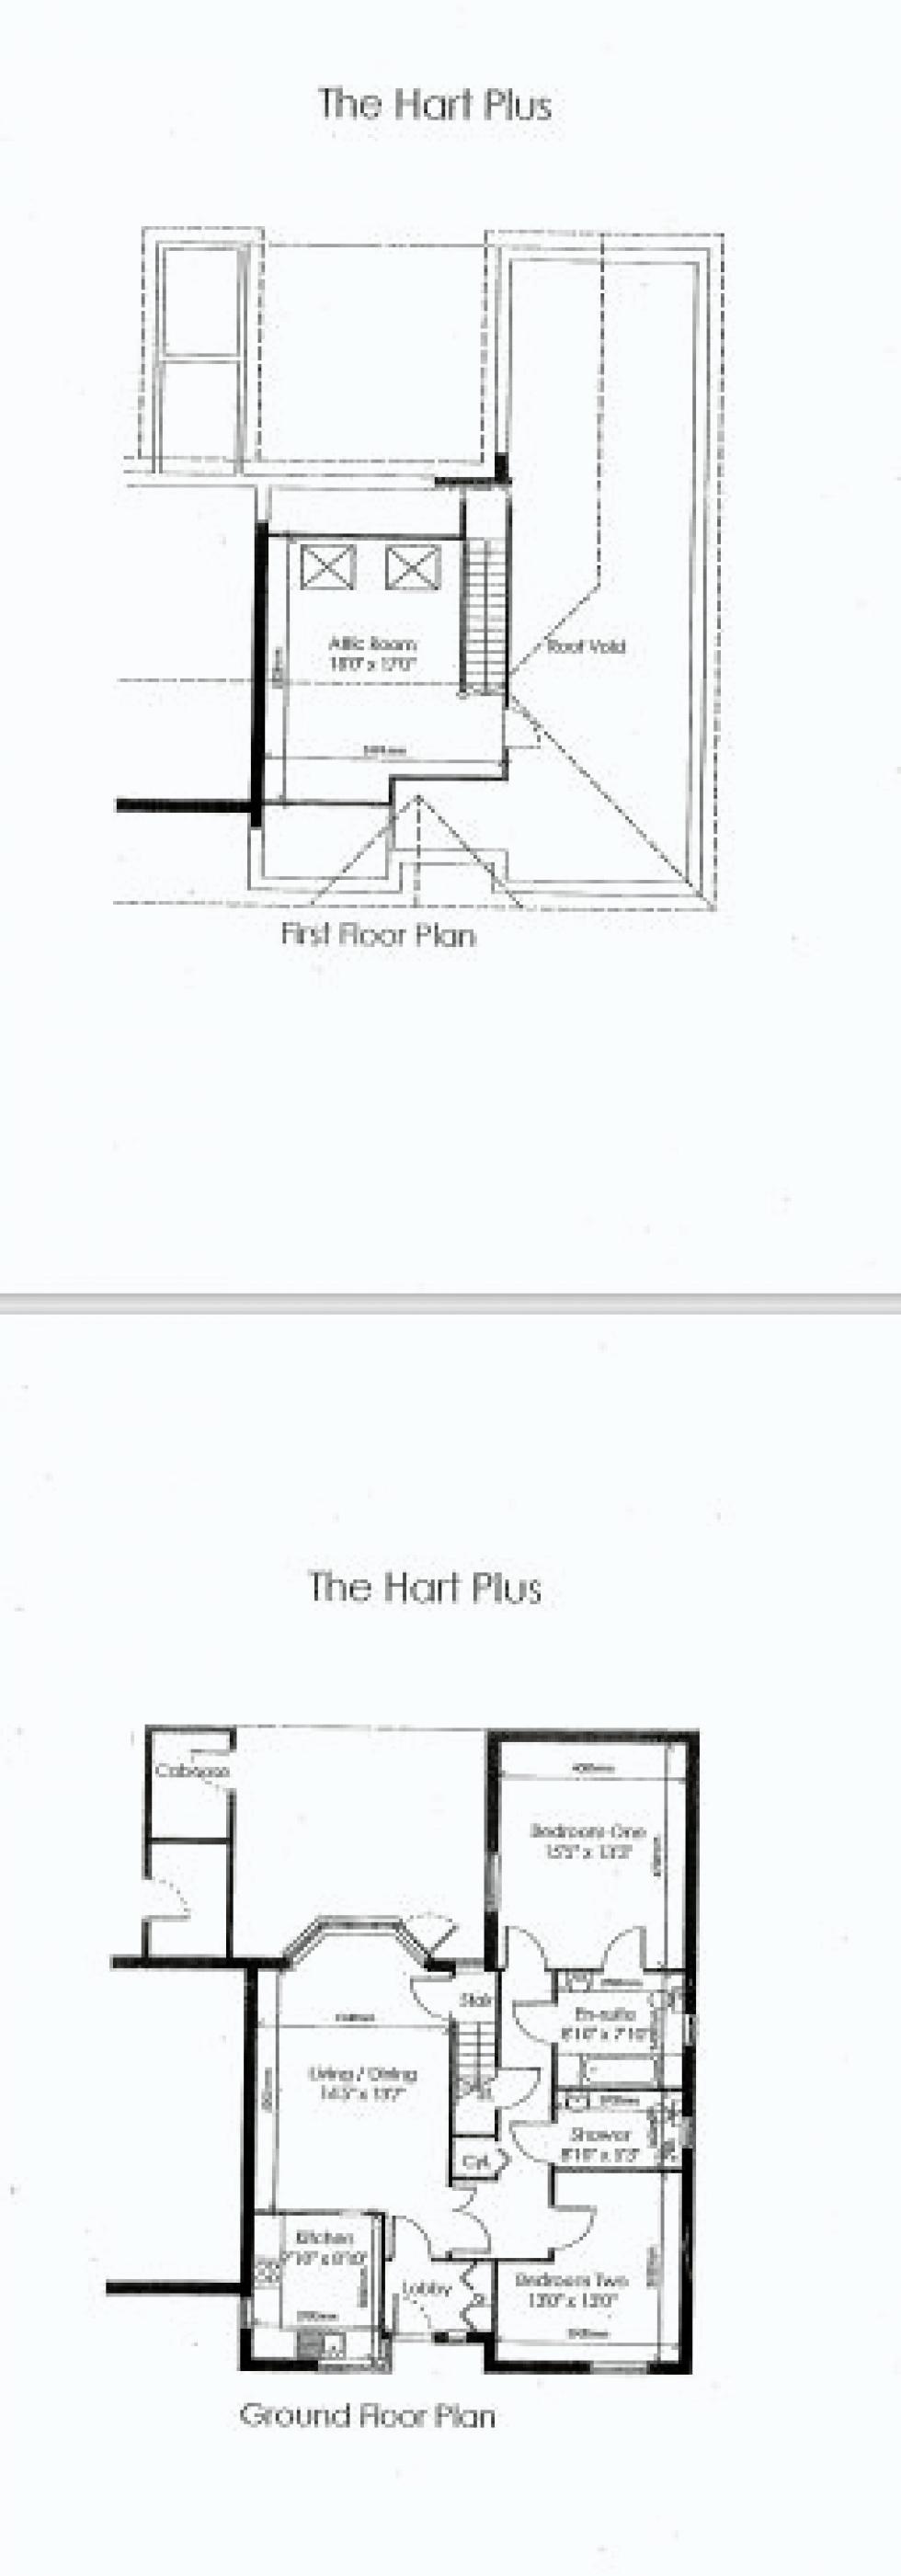 The hart plus floorplan